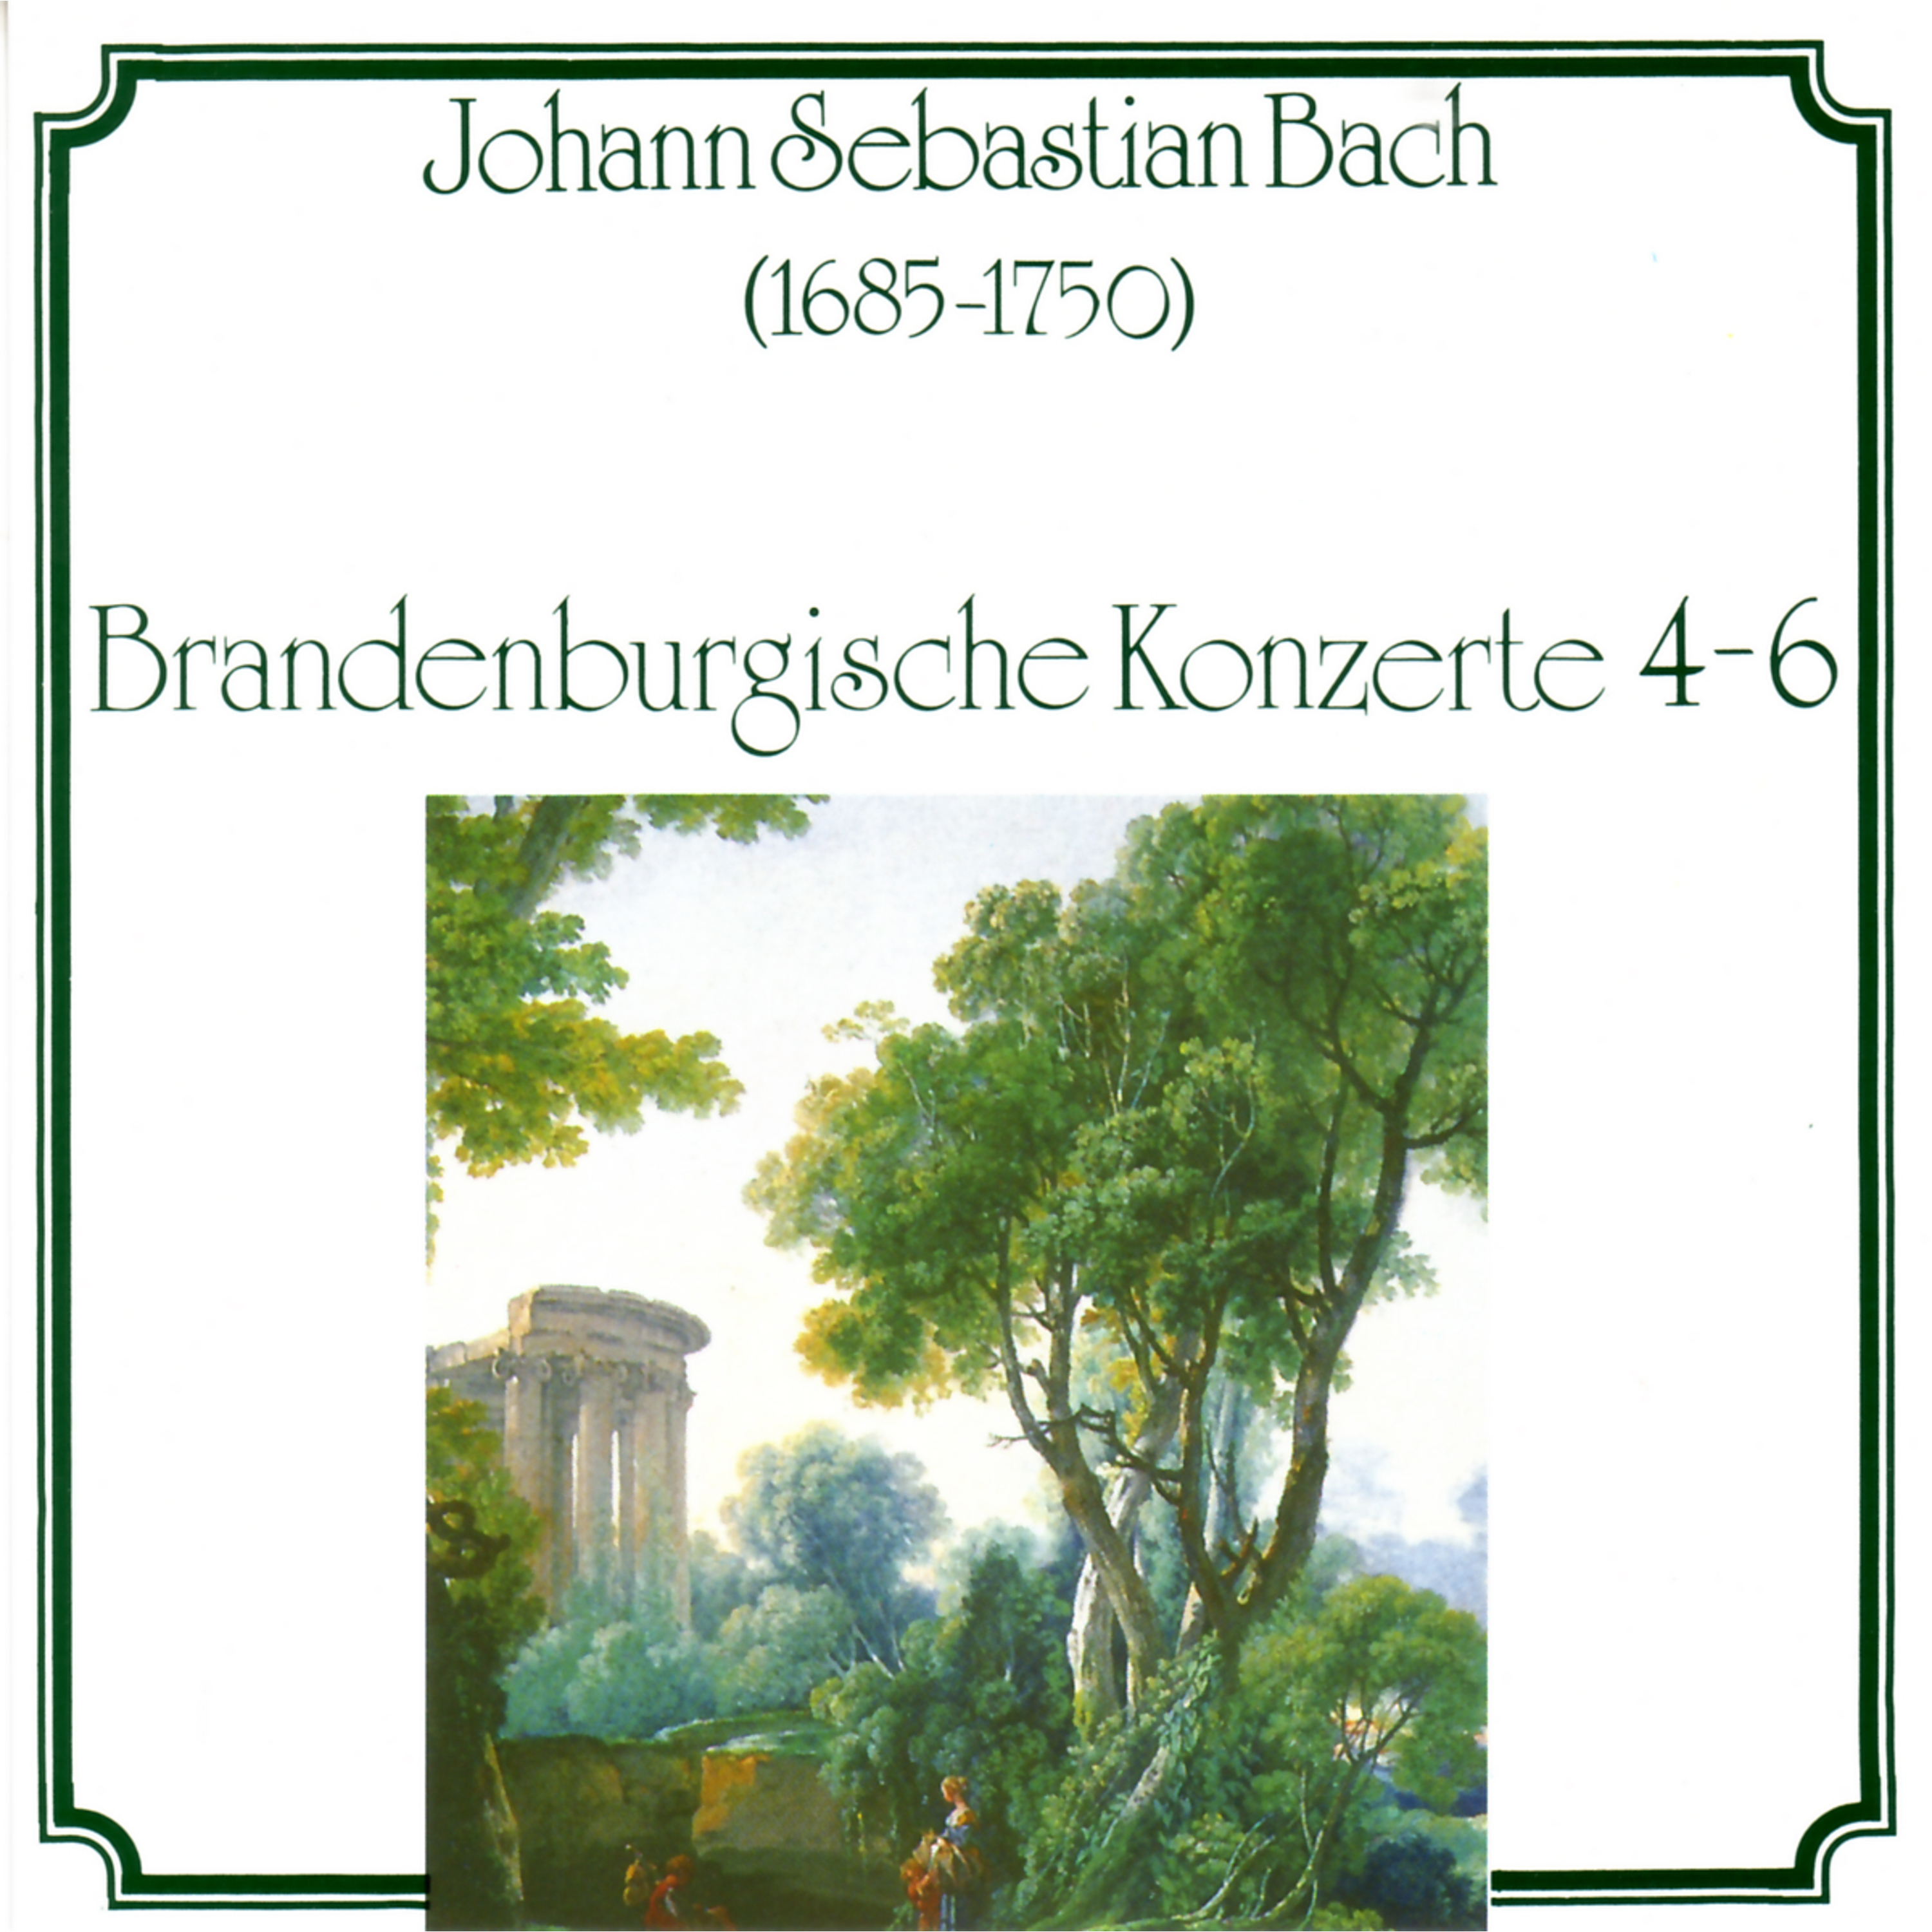 Johann Sebastian Bach: Brandenburgische Konzerte 4-6